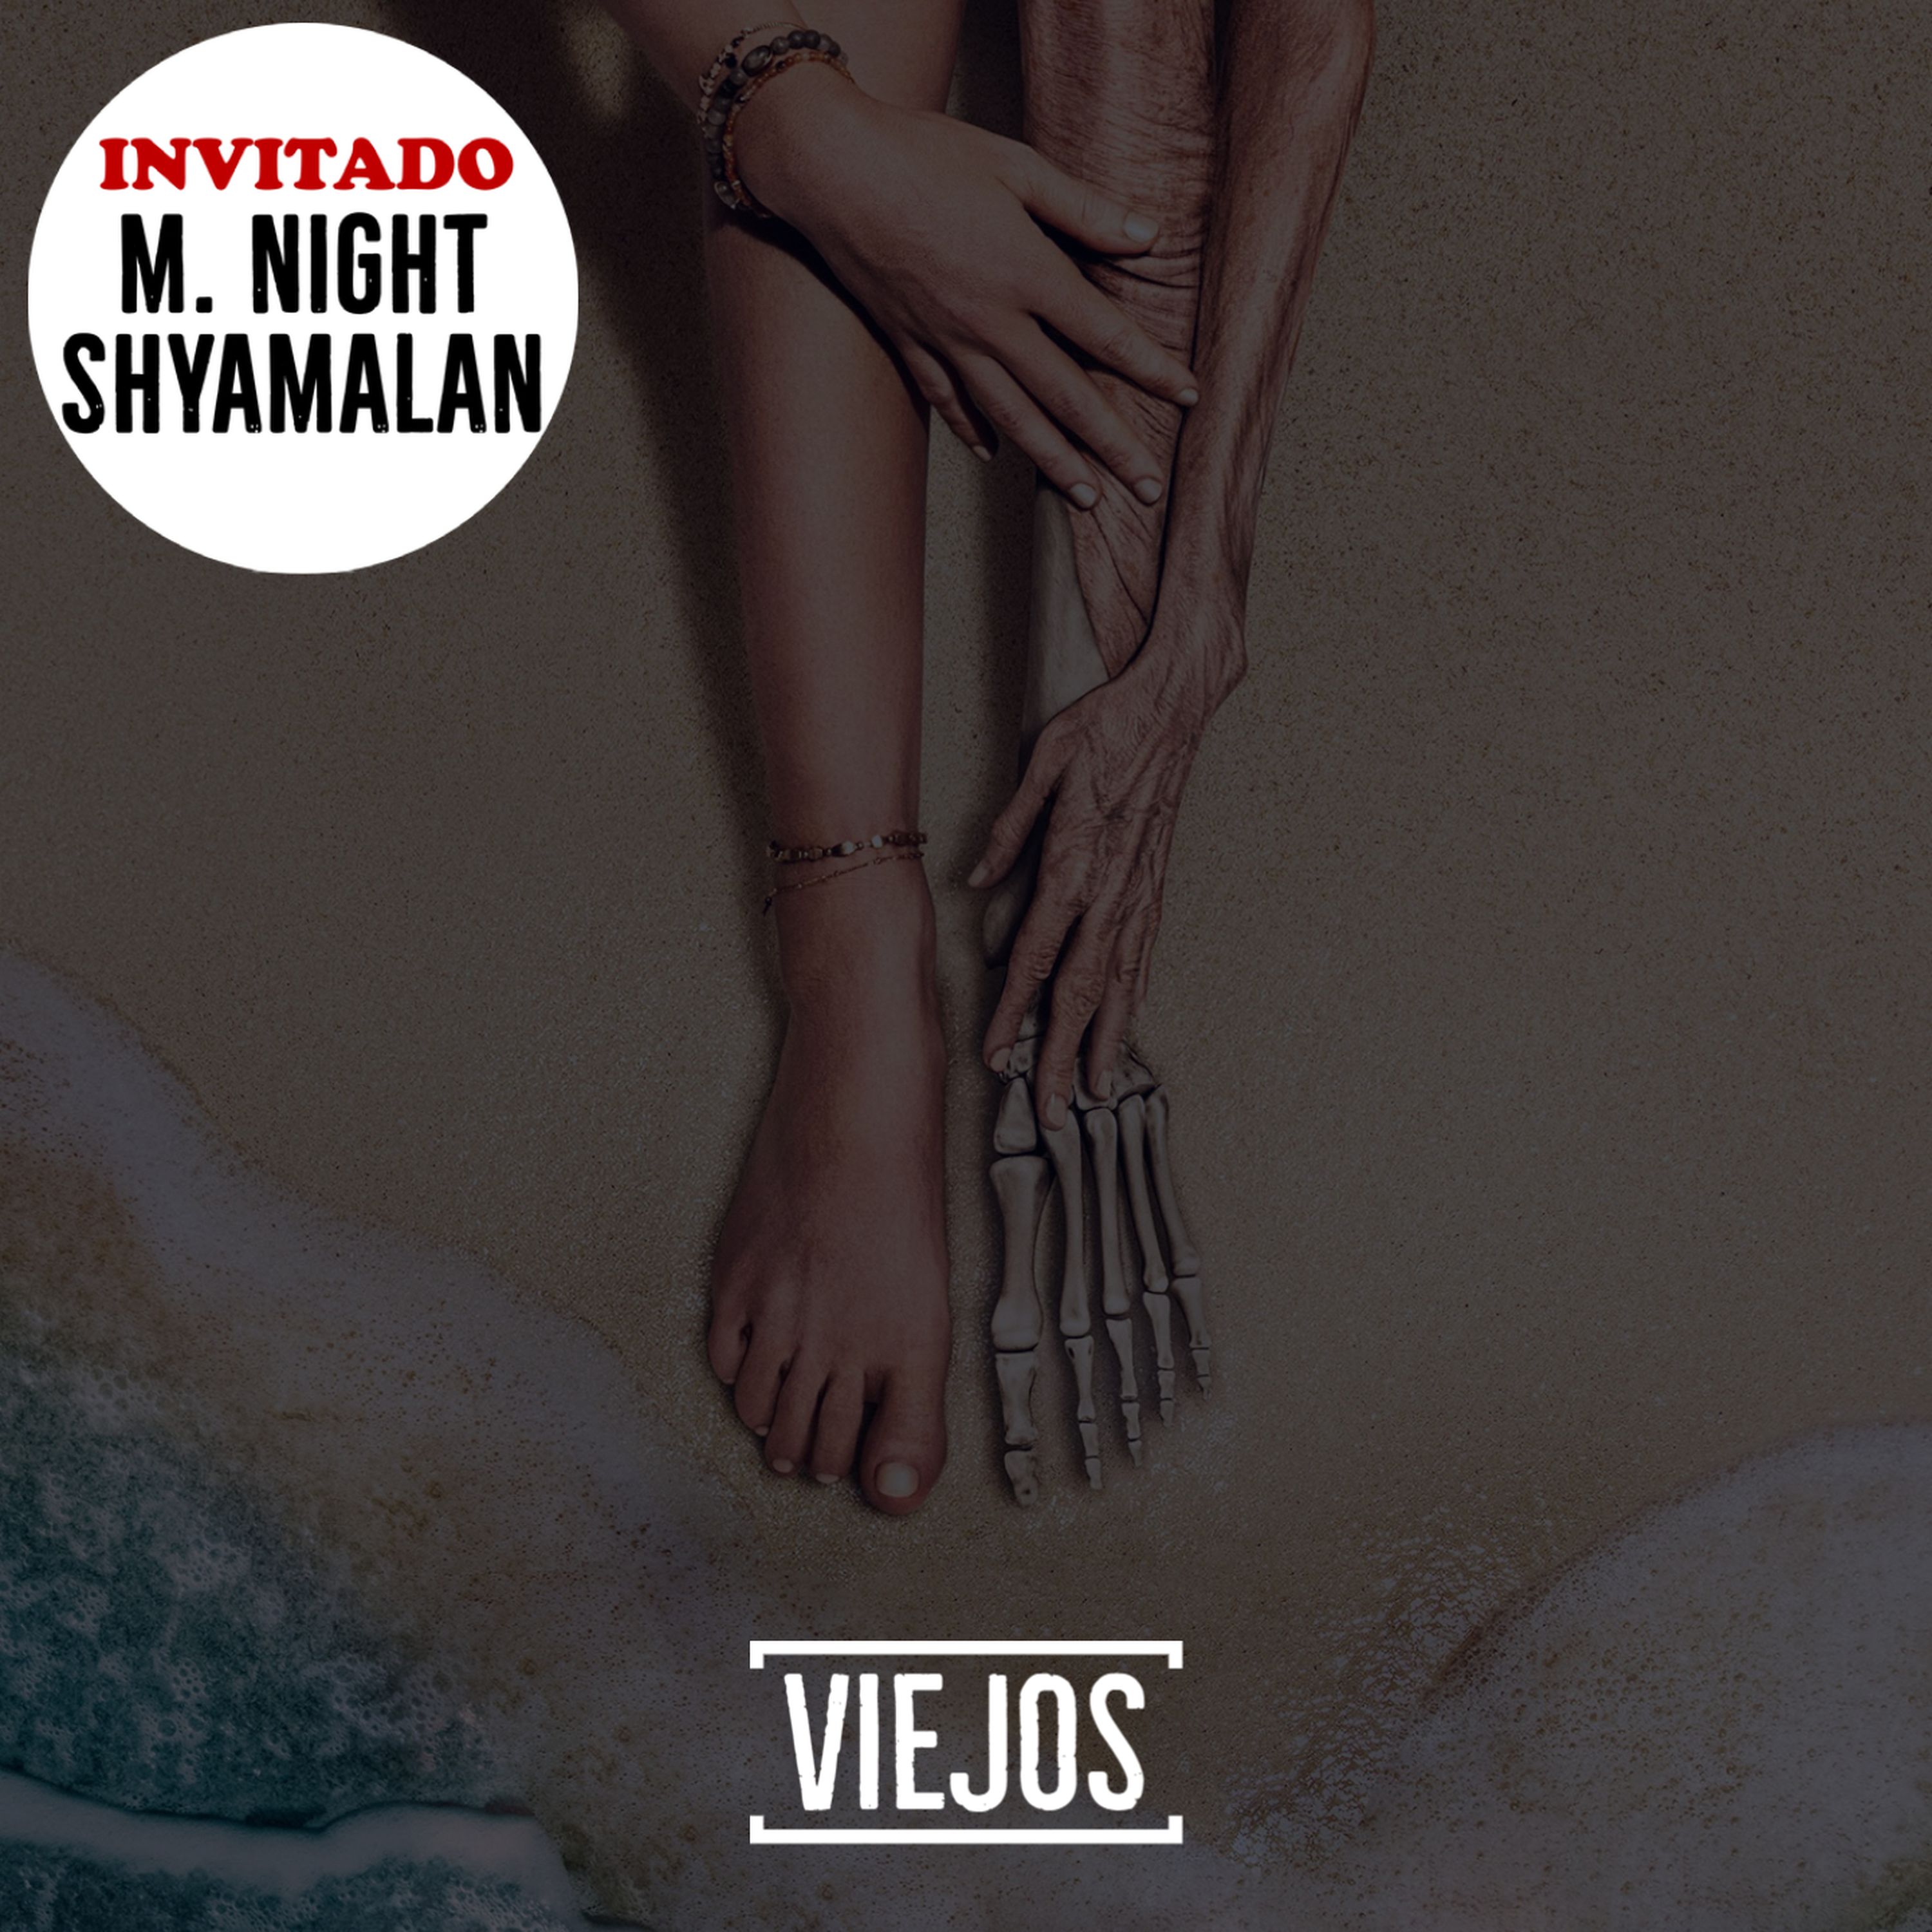 #116 Película 'Viejos' - con M. Night Shyamalan